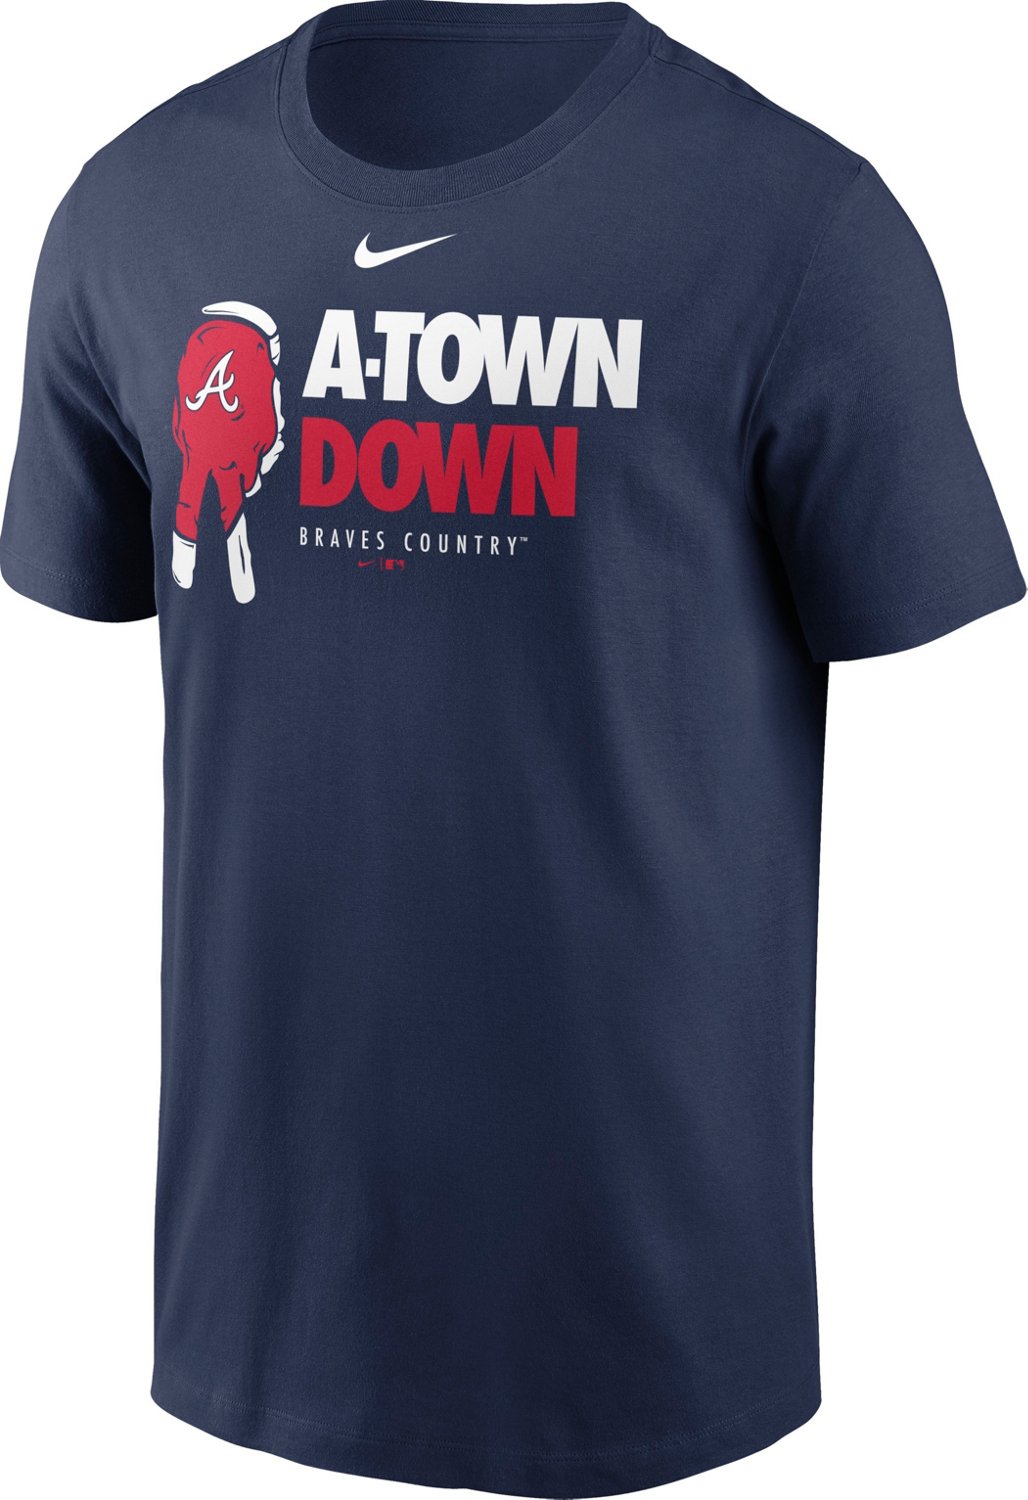 Nike Men's Atlanta Braves Town Down T-shirt | Academy